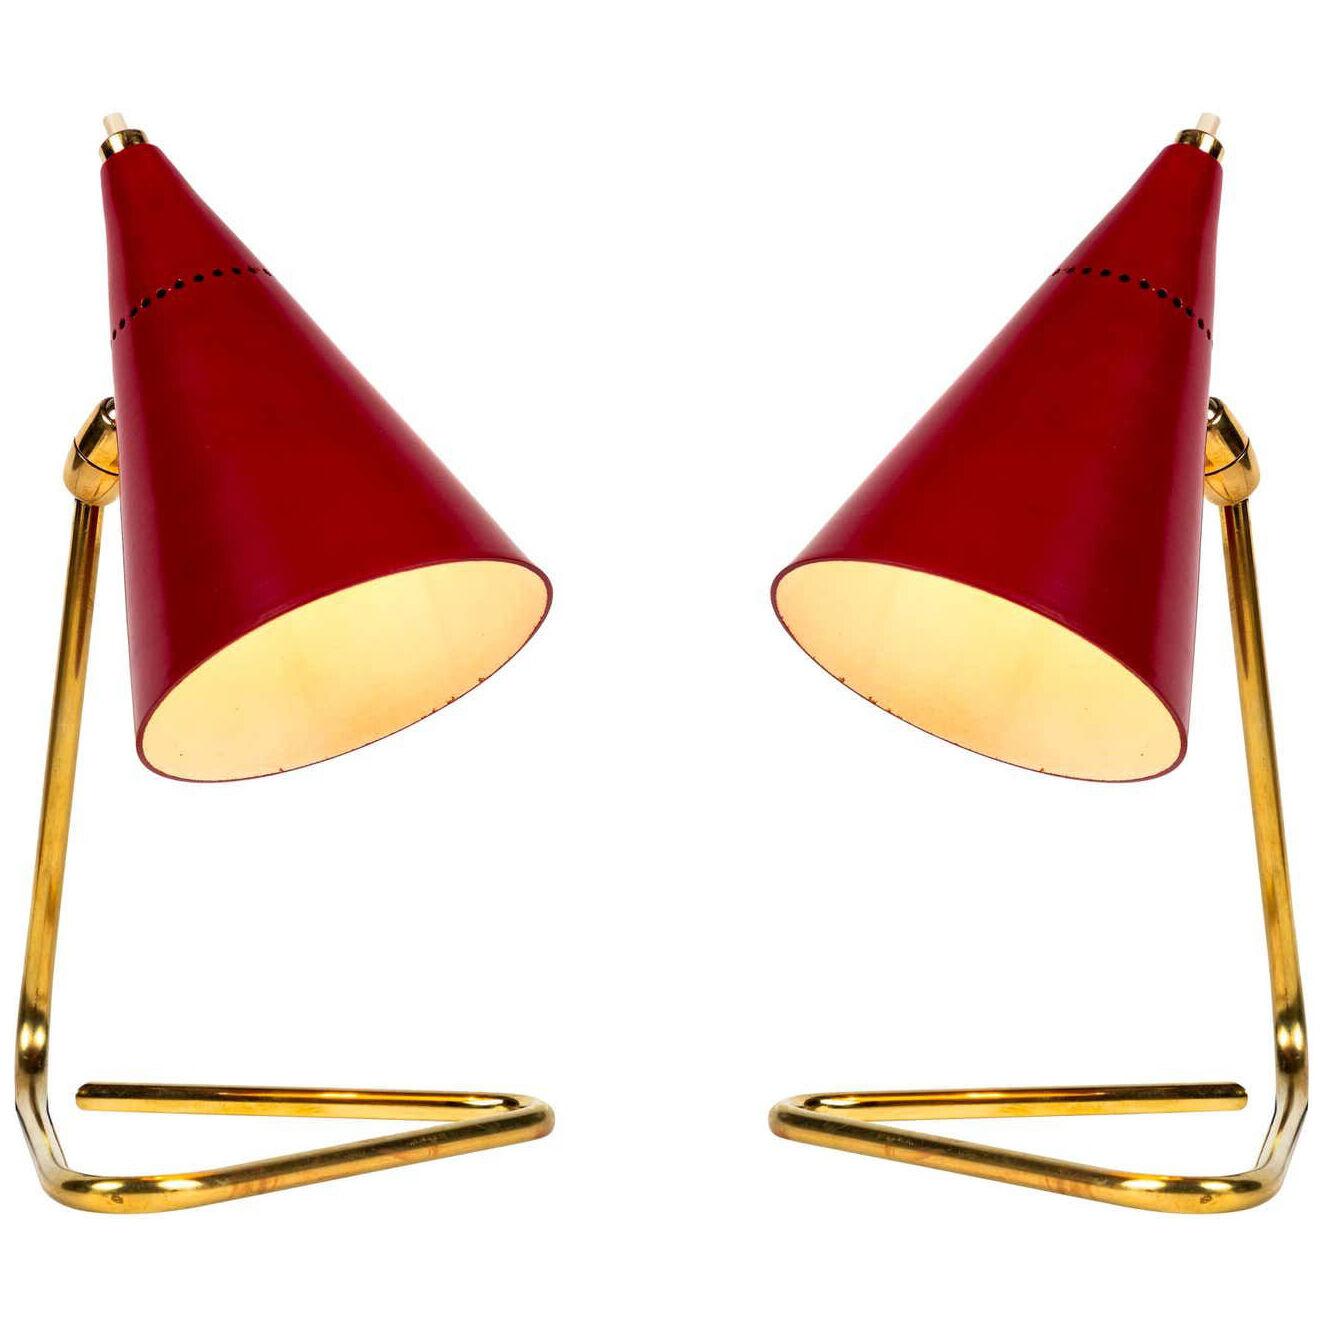 1950s Giuseppe Ostuni Red Cone Table Lamp for Oluce